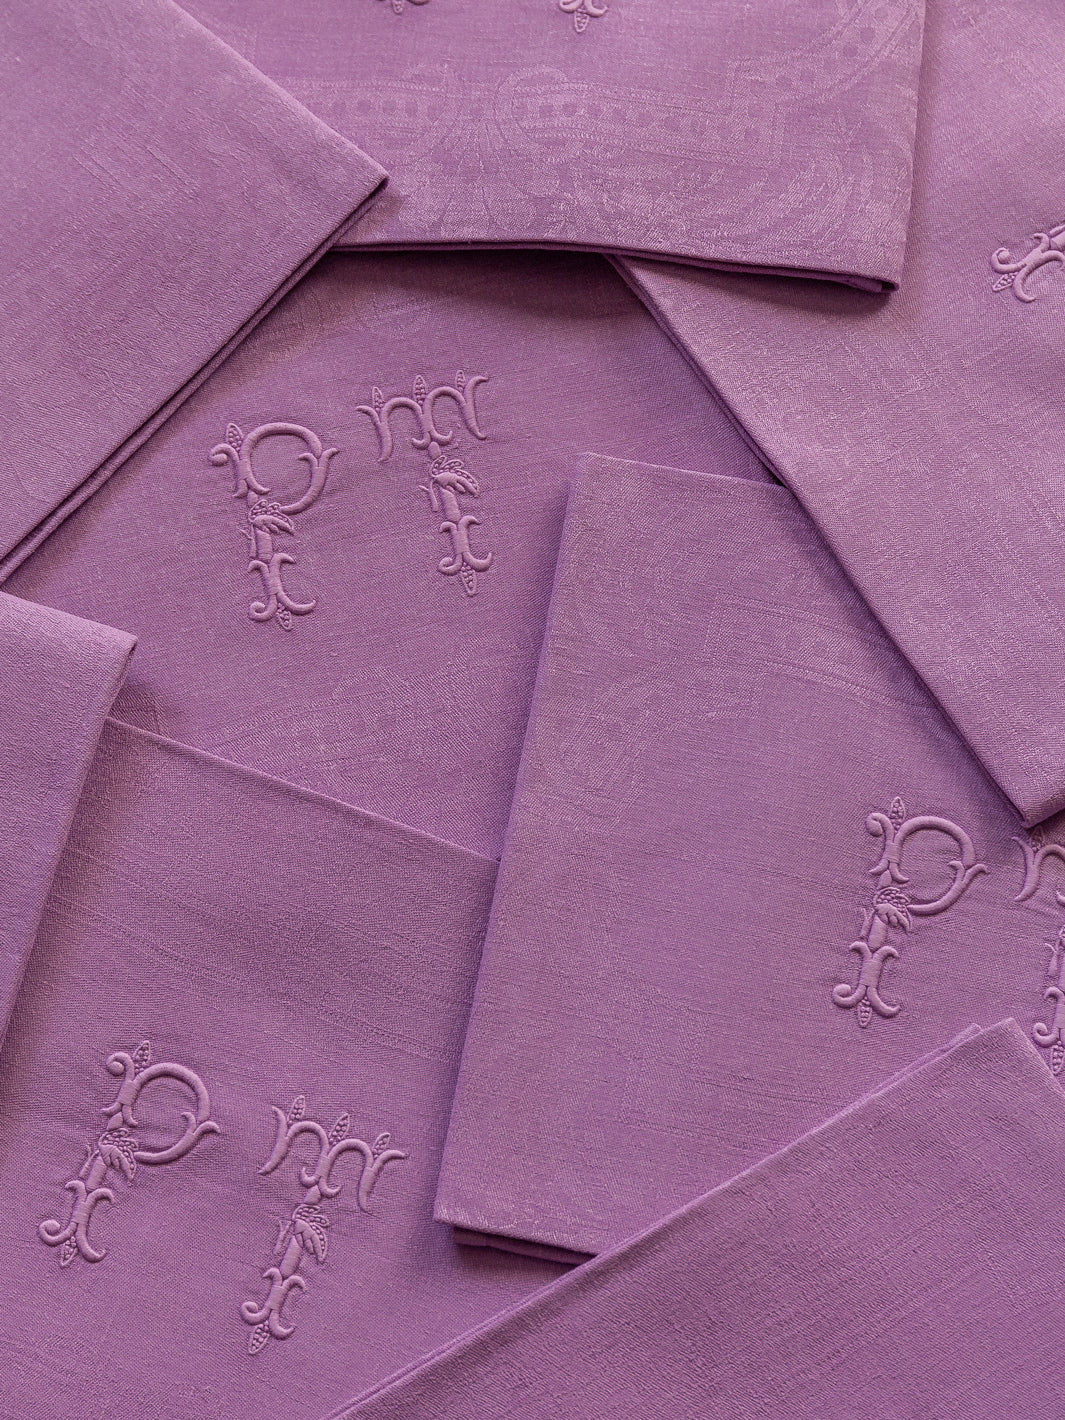 Set de 8 serviettes Violet Damask "PT"